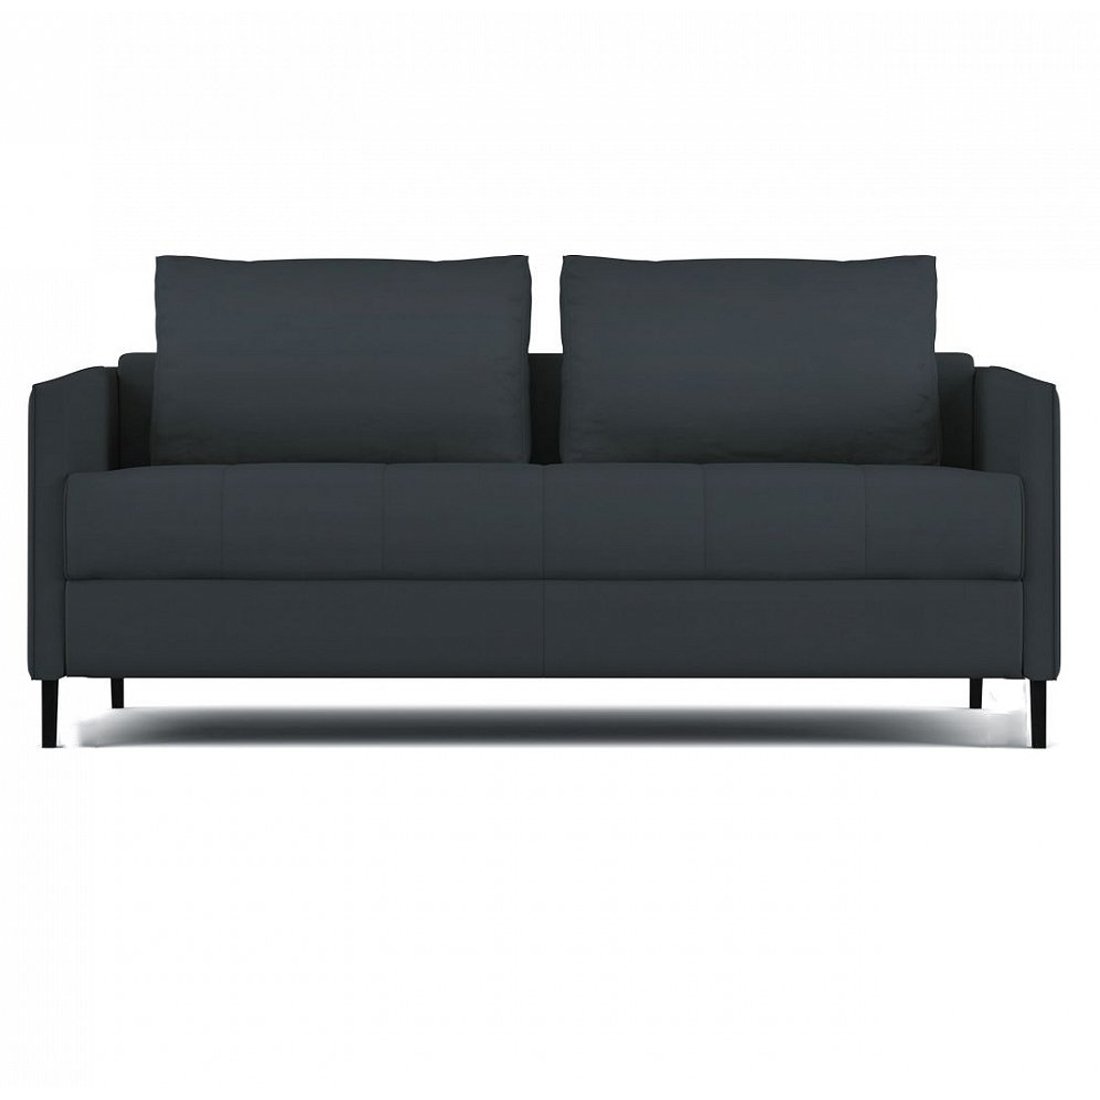 Rebecca 2 Seater Fabric Sofa For Living Room (Dark Grey) - Torque India